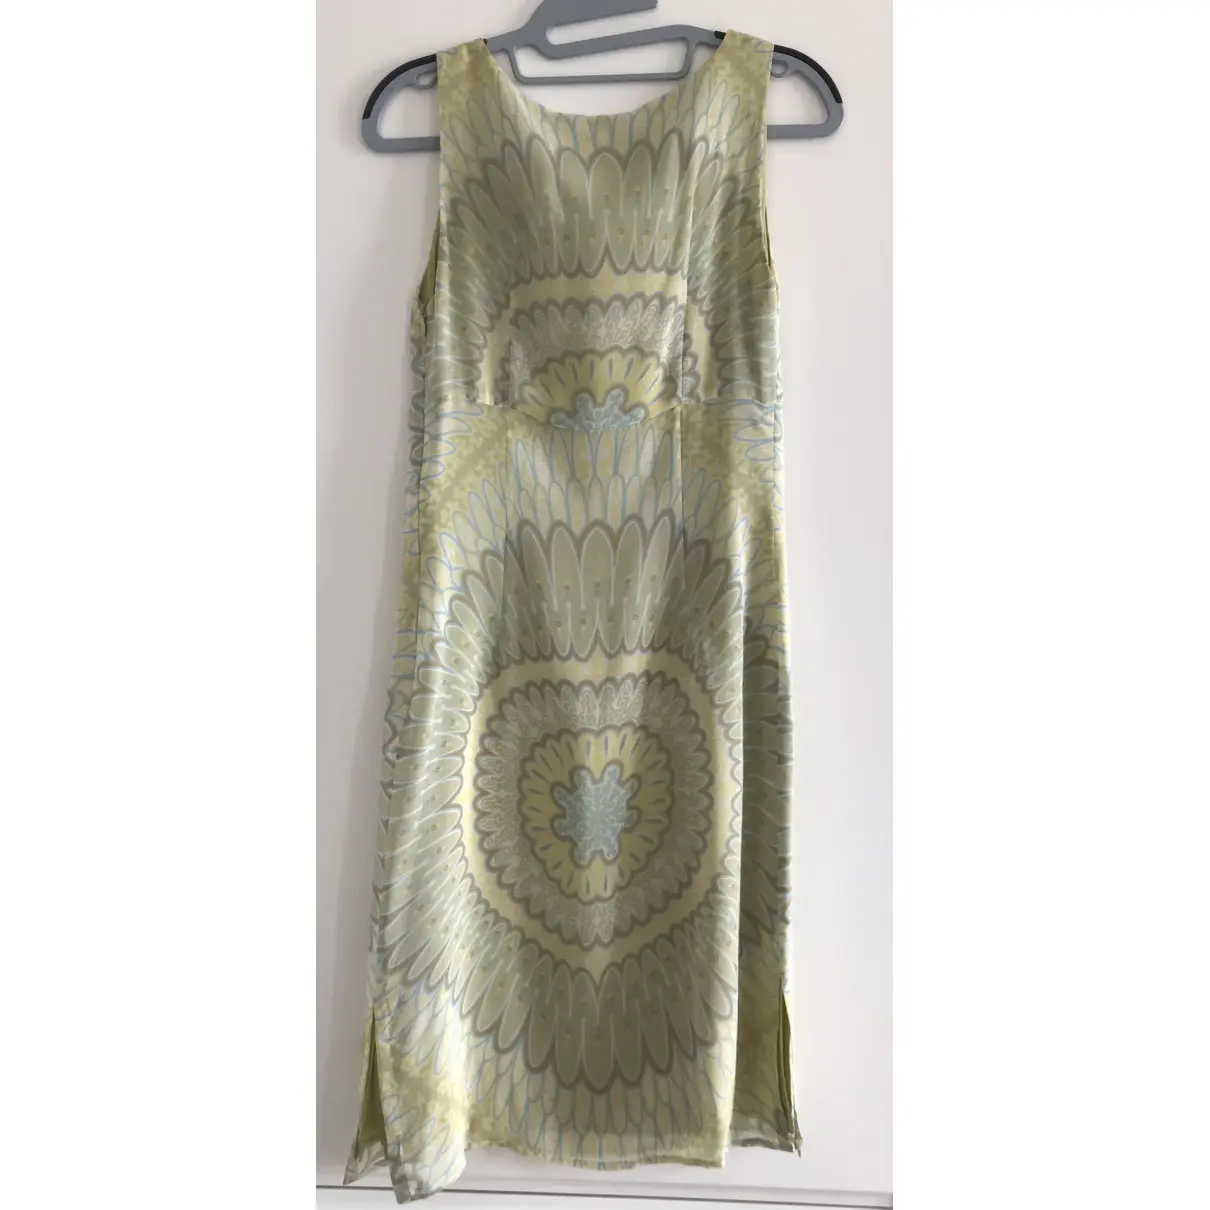 Buy Max Mara Max Mara Atelier silk mid-length dress online